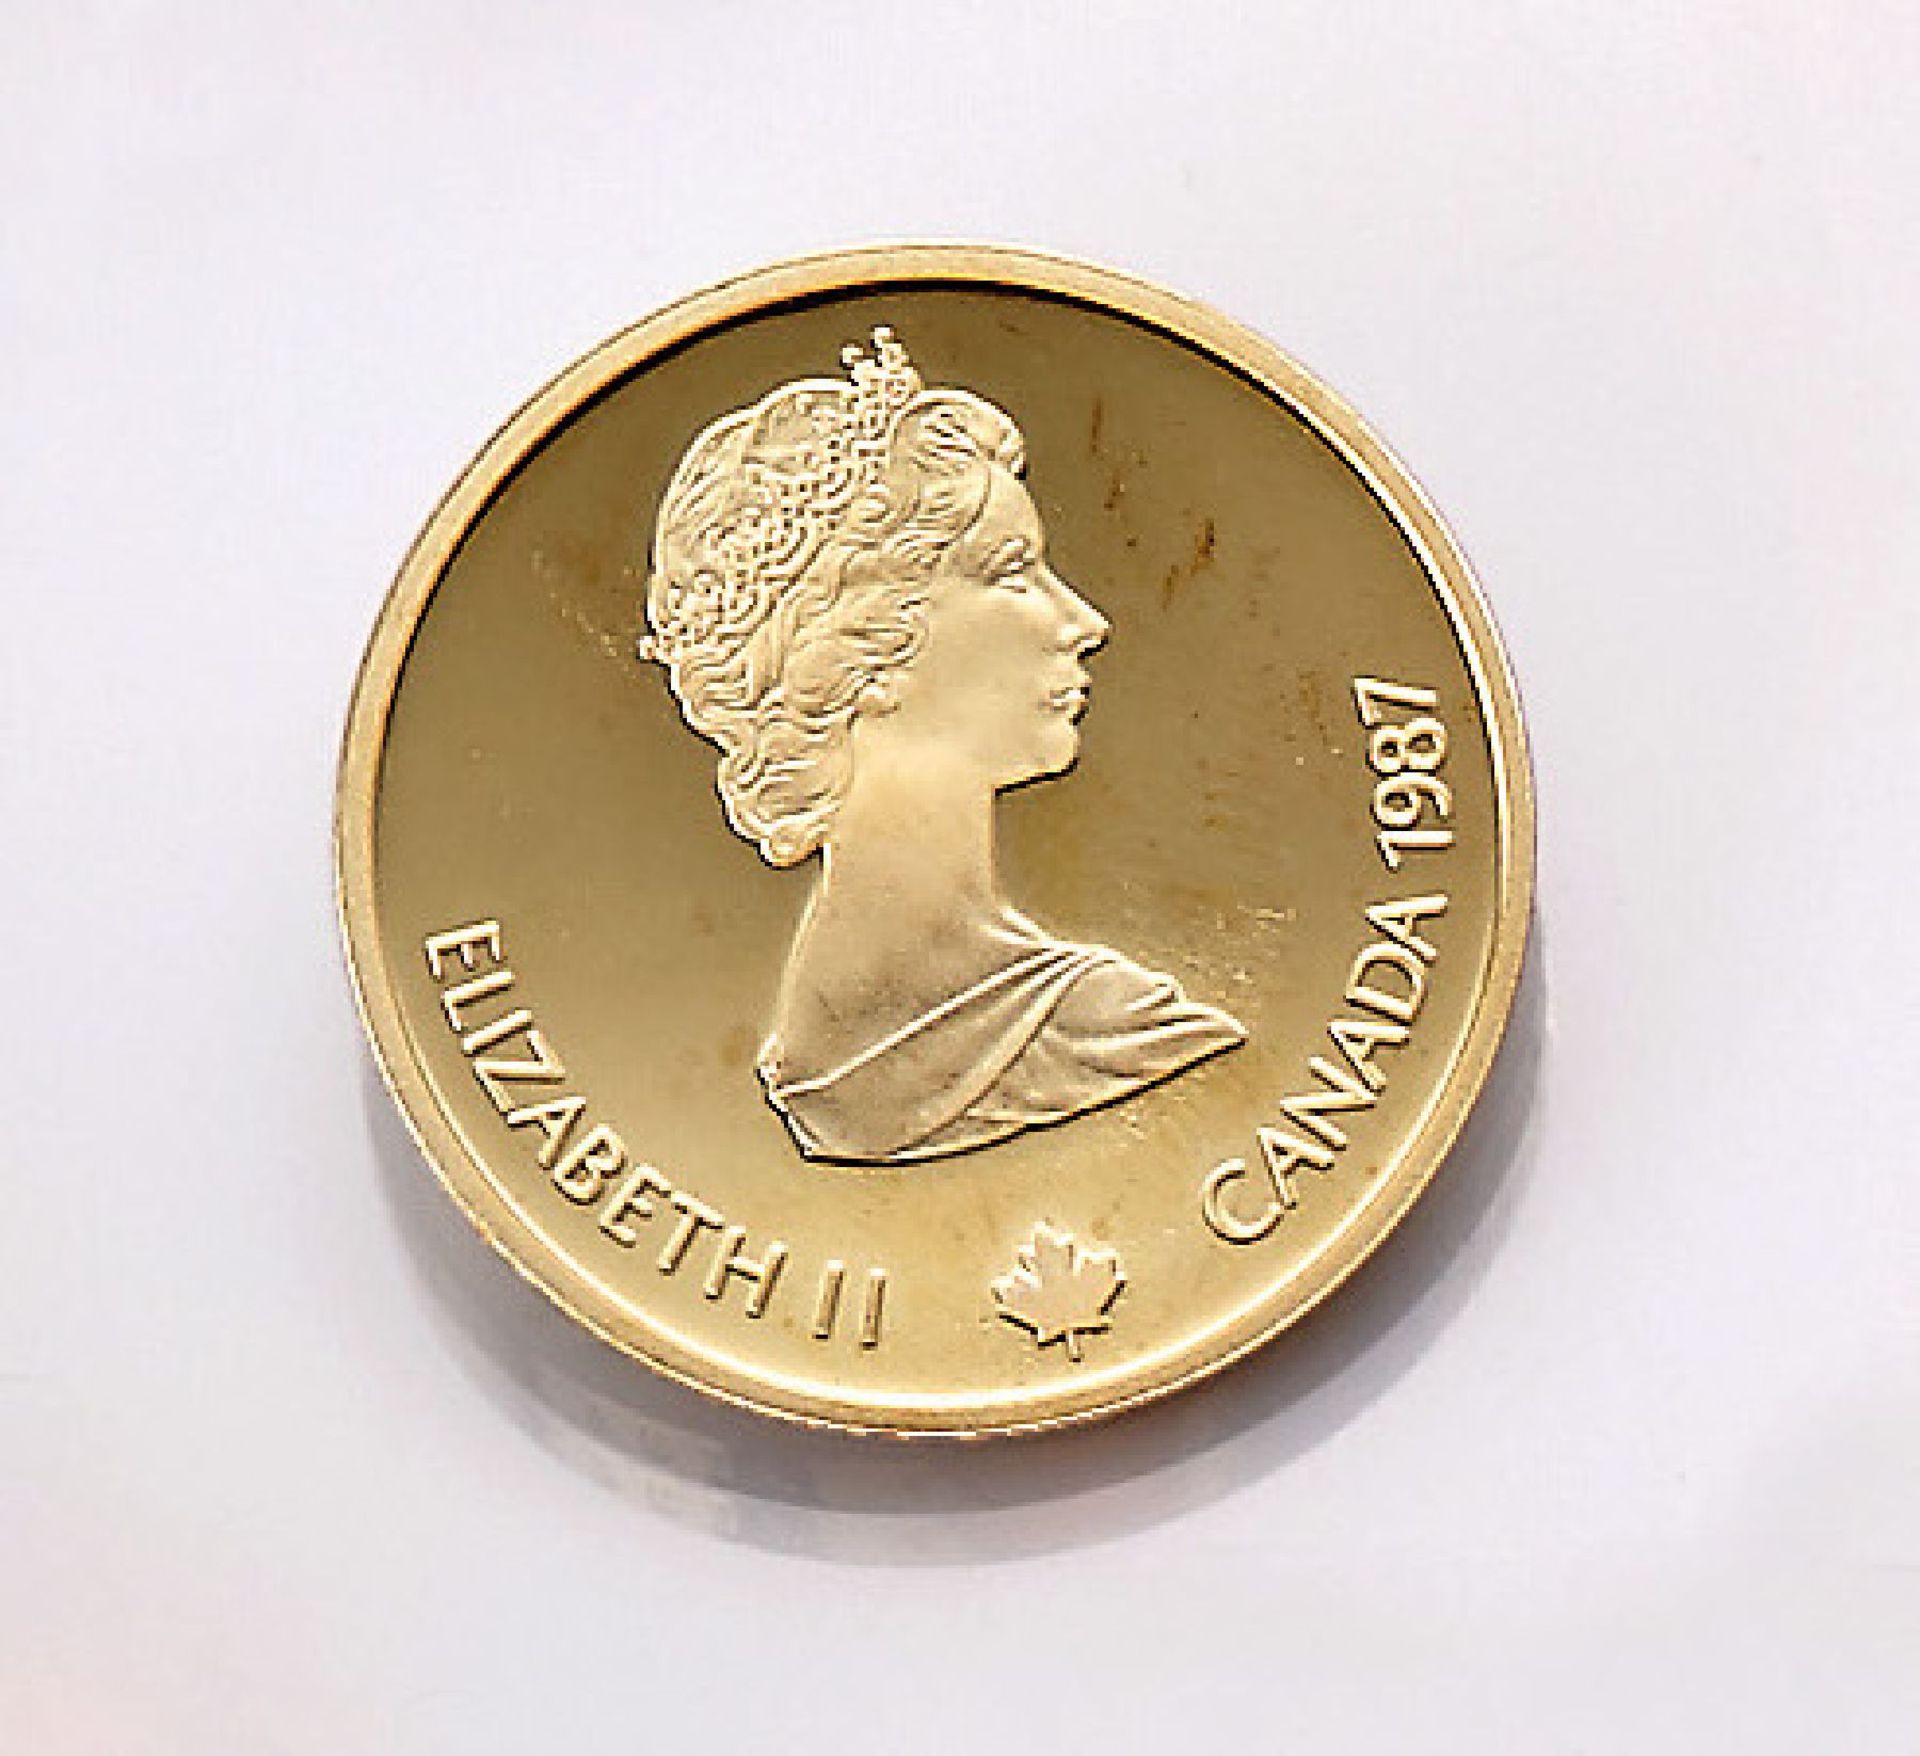 Goldmünze, 100 Dollars, Canada, 1987, Elizabeth II., Calgary 1988Gold coin, 100 Dollars, Canada,